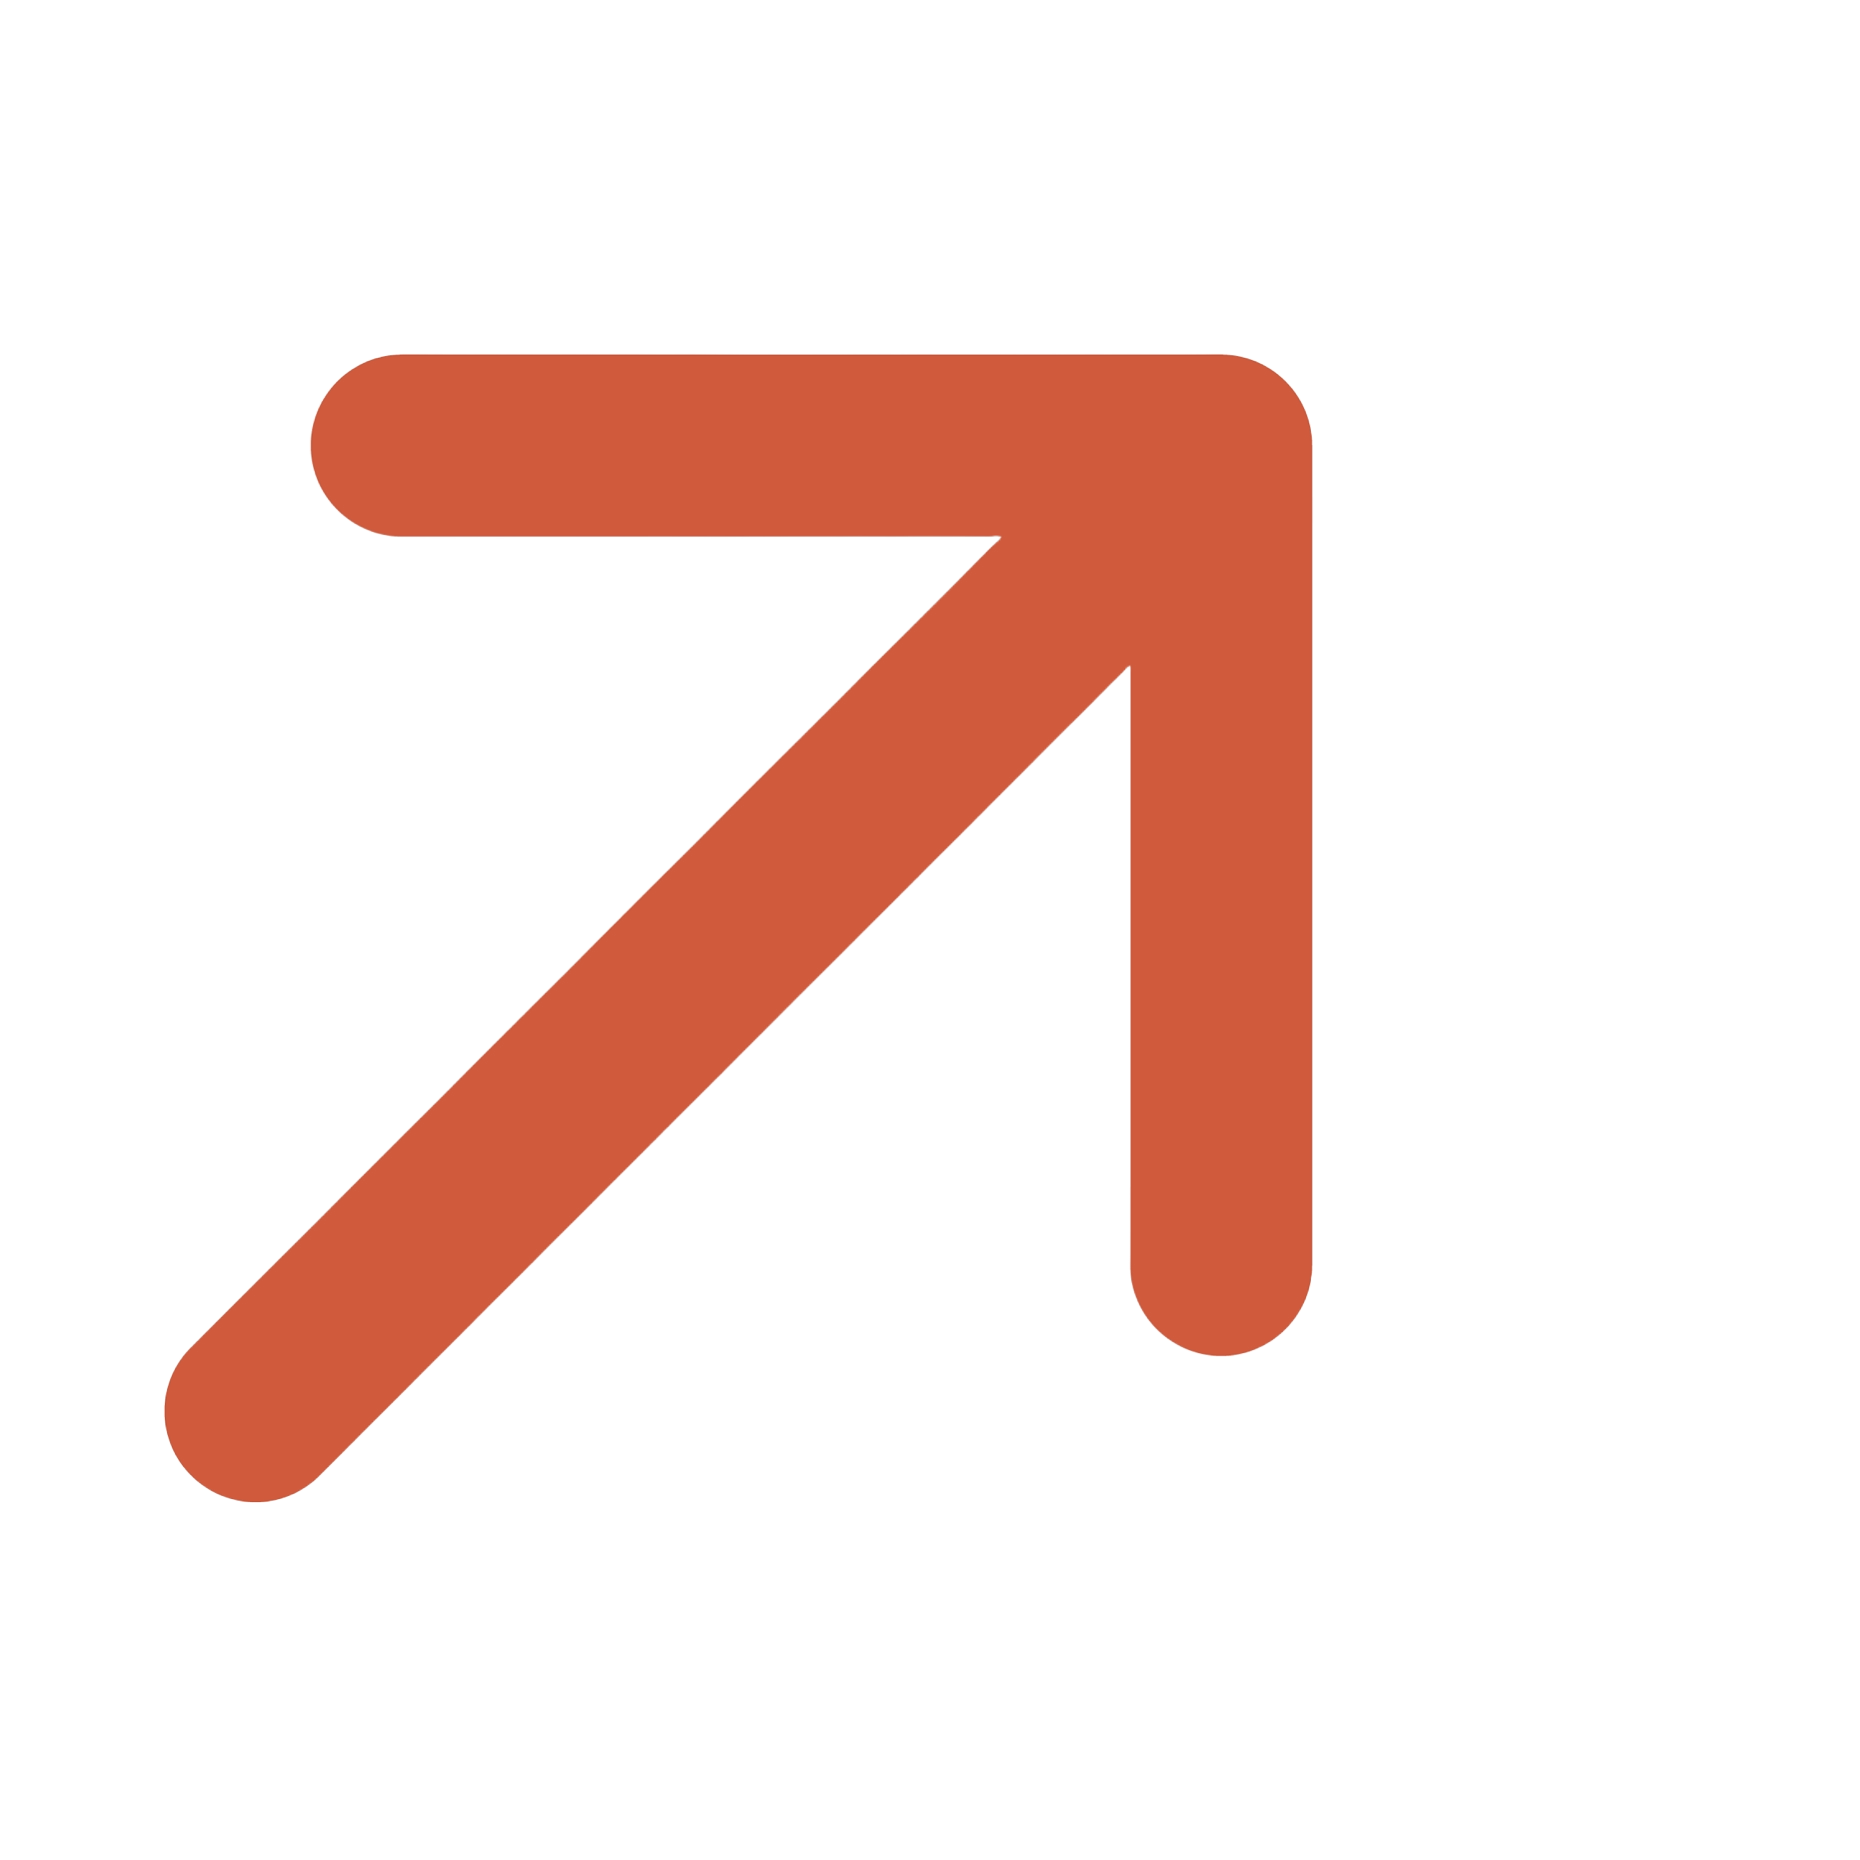 Small orange arrow symbol